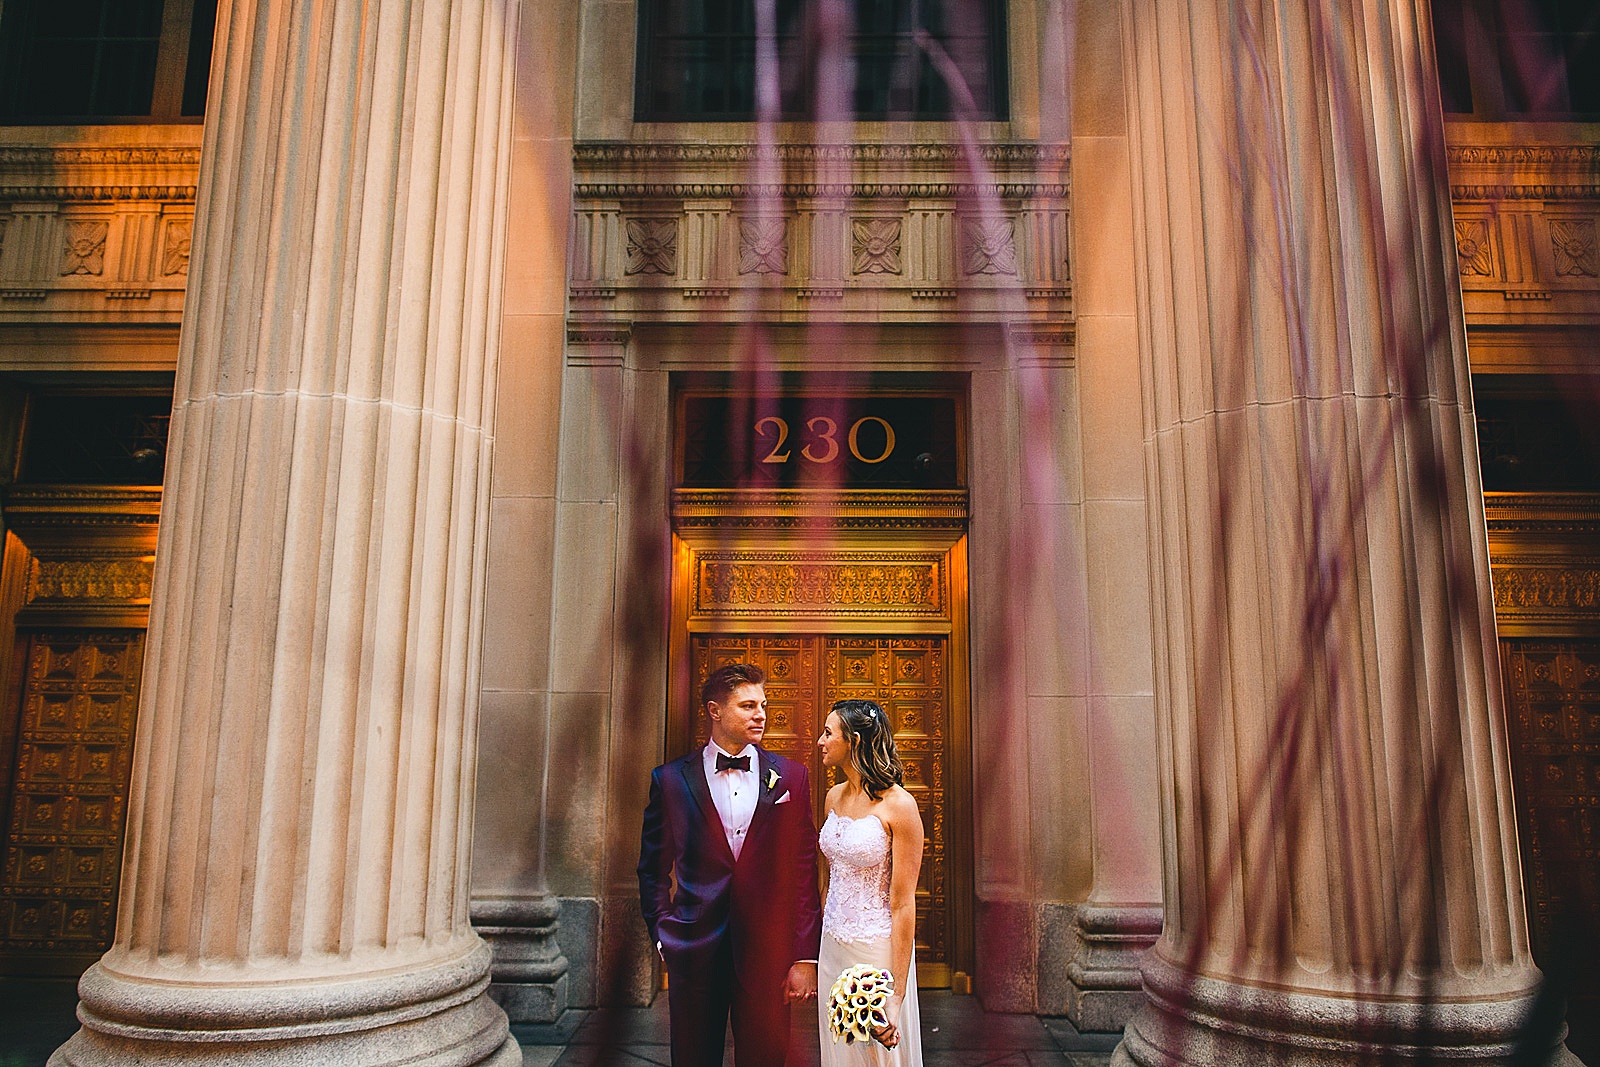 16 w city center chicago hotel wedding photos - The Wedding of Lani & Ross at W City Center in Chicago